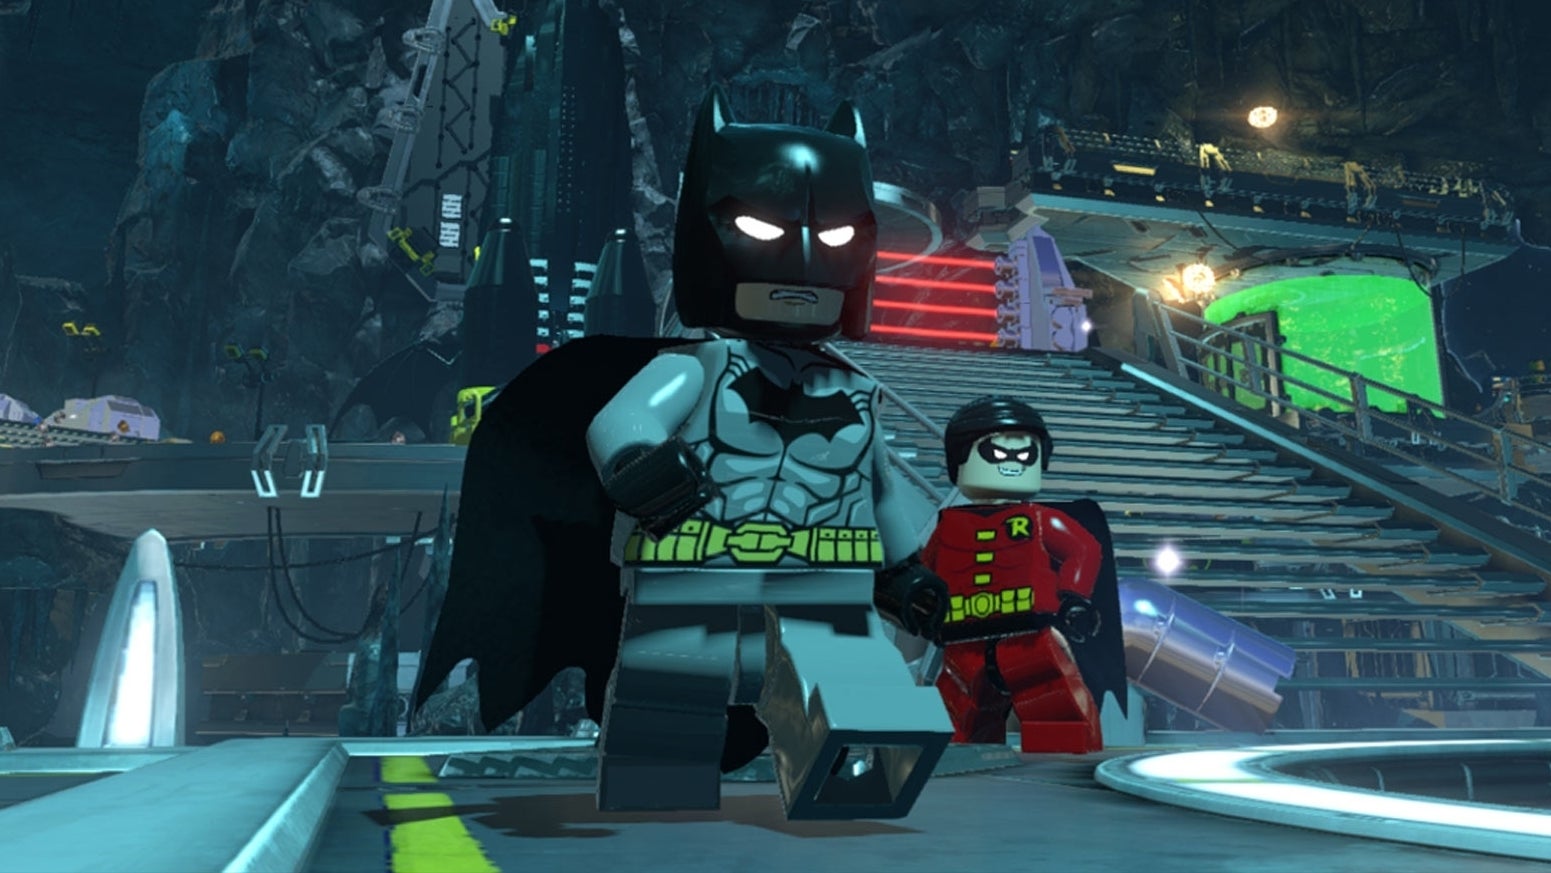 Bilder zu Lego Batman 3 Cheats (PC, Mac, PS3, PS4, PS Vita, Xbox 360, Xbox One, Wii U, Nintendo 3DS)